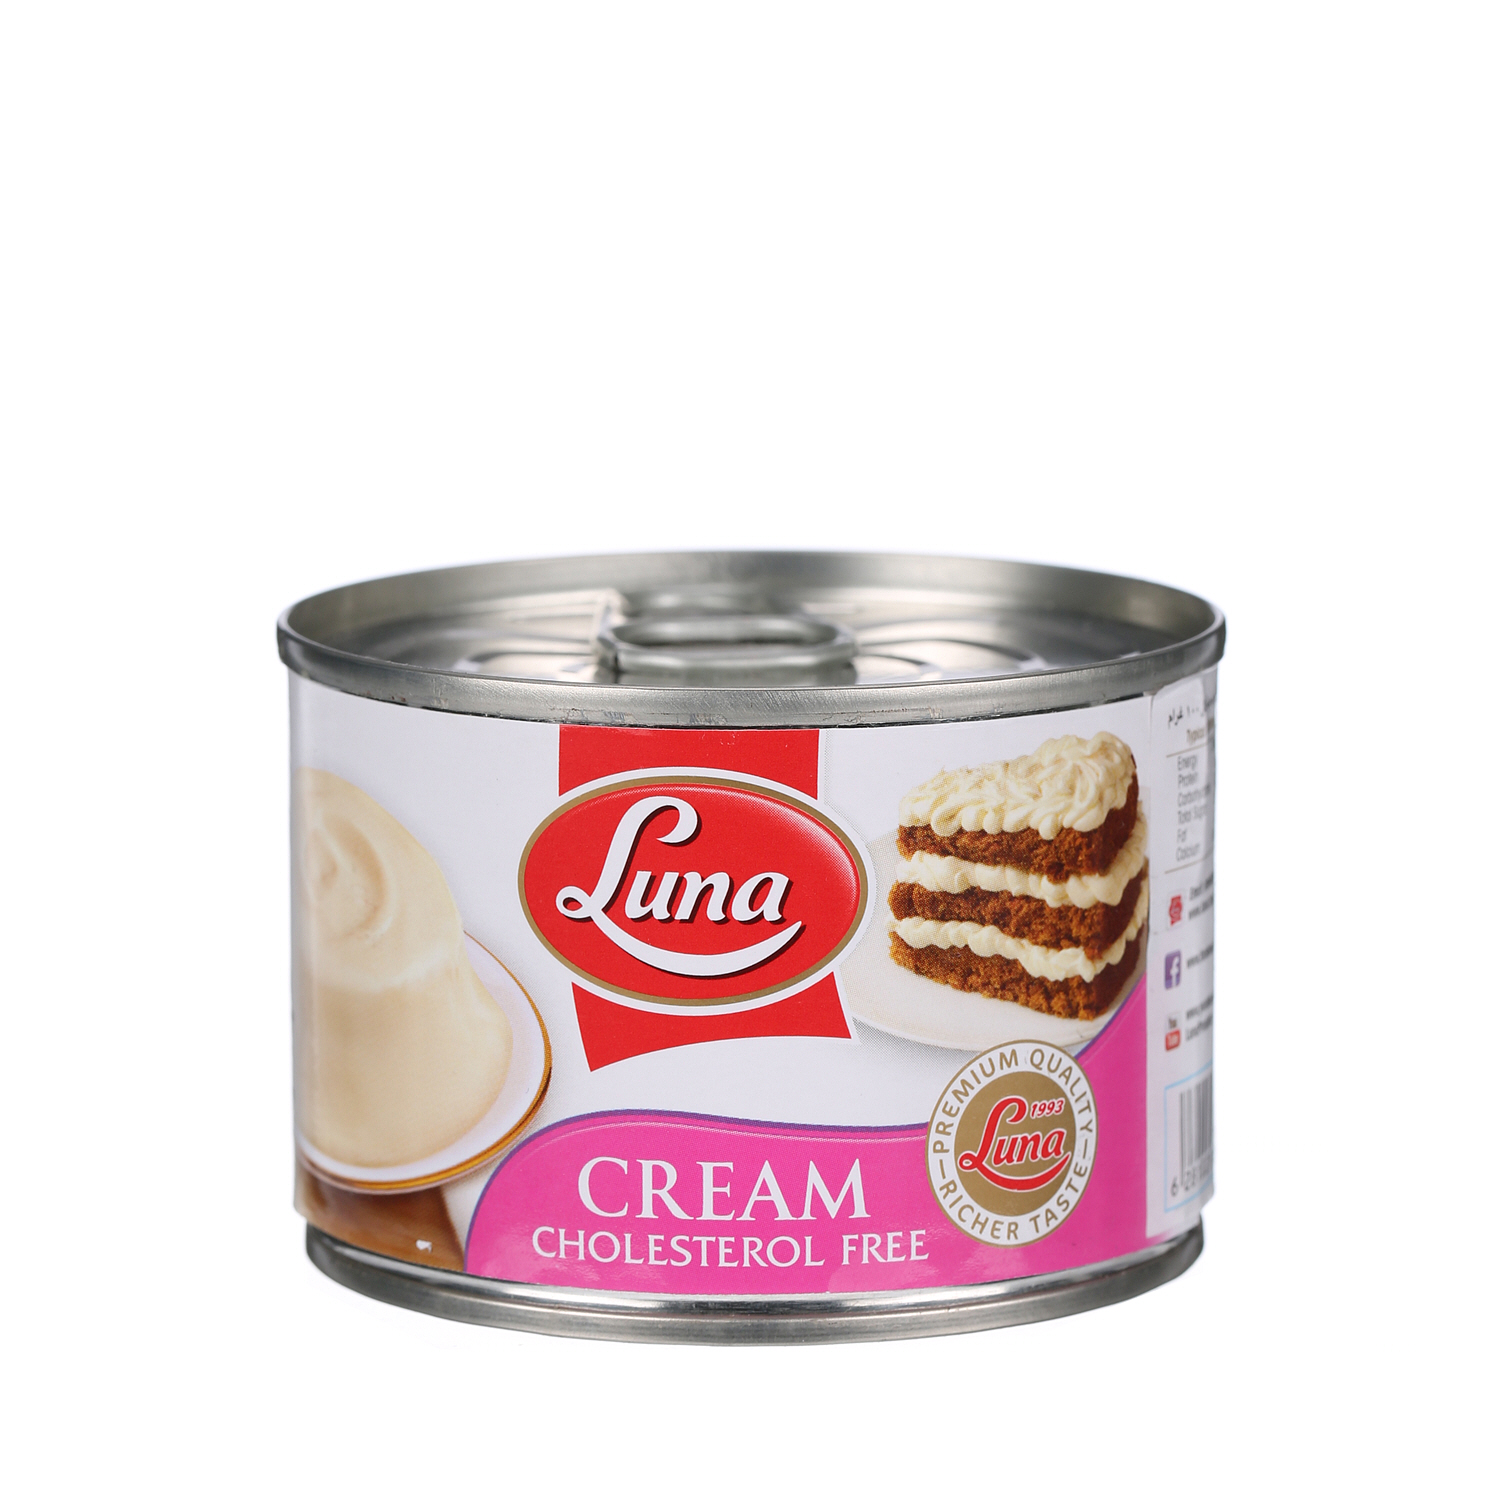 Luna Filled Cream Cholesterol Free 155 g